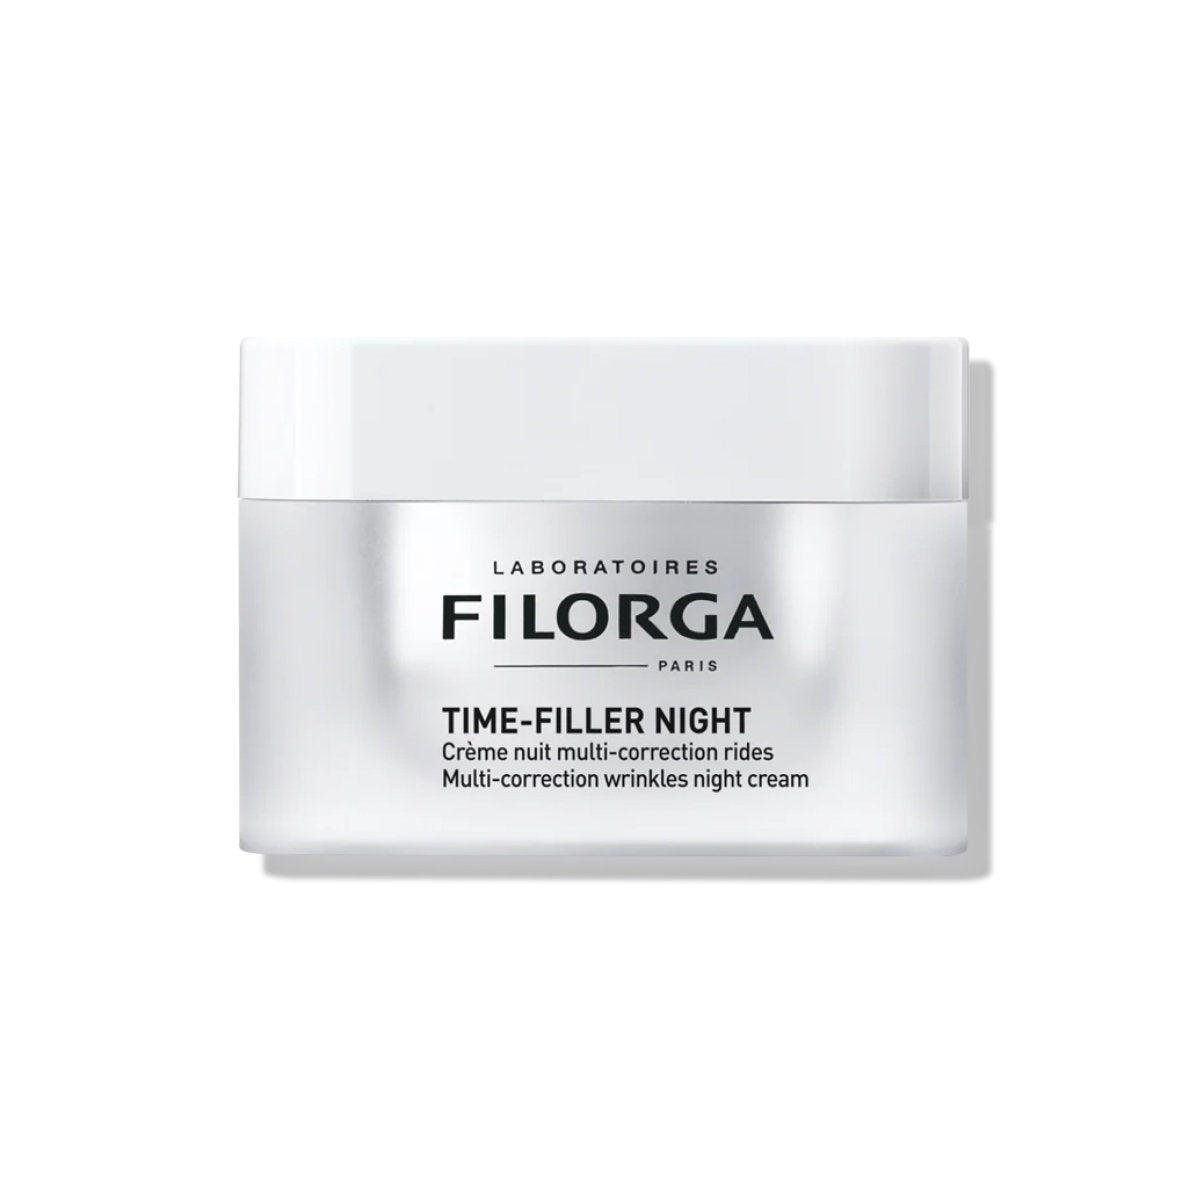 Filorga-TIME-FILLER NIGHT 50ml - SkincareEssentials